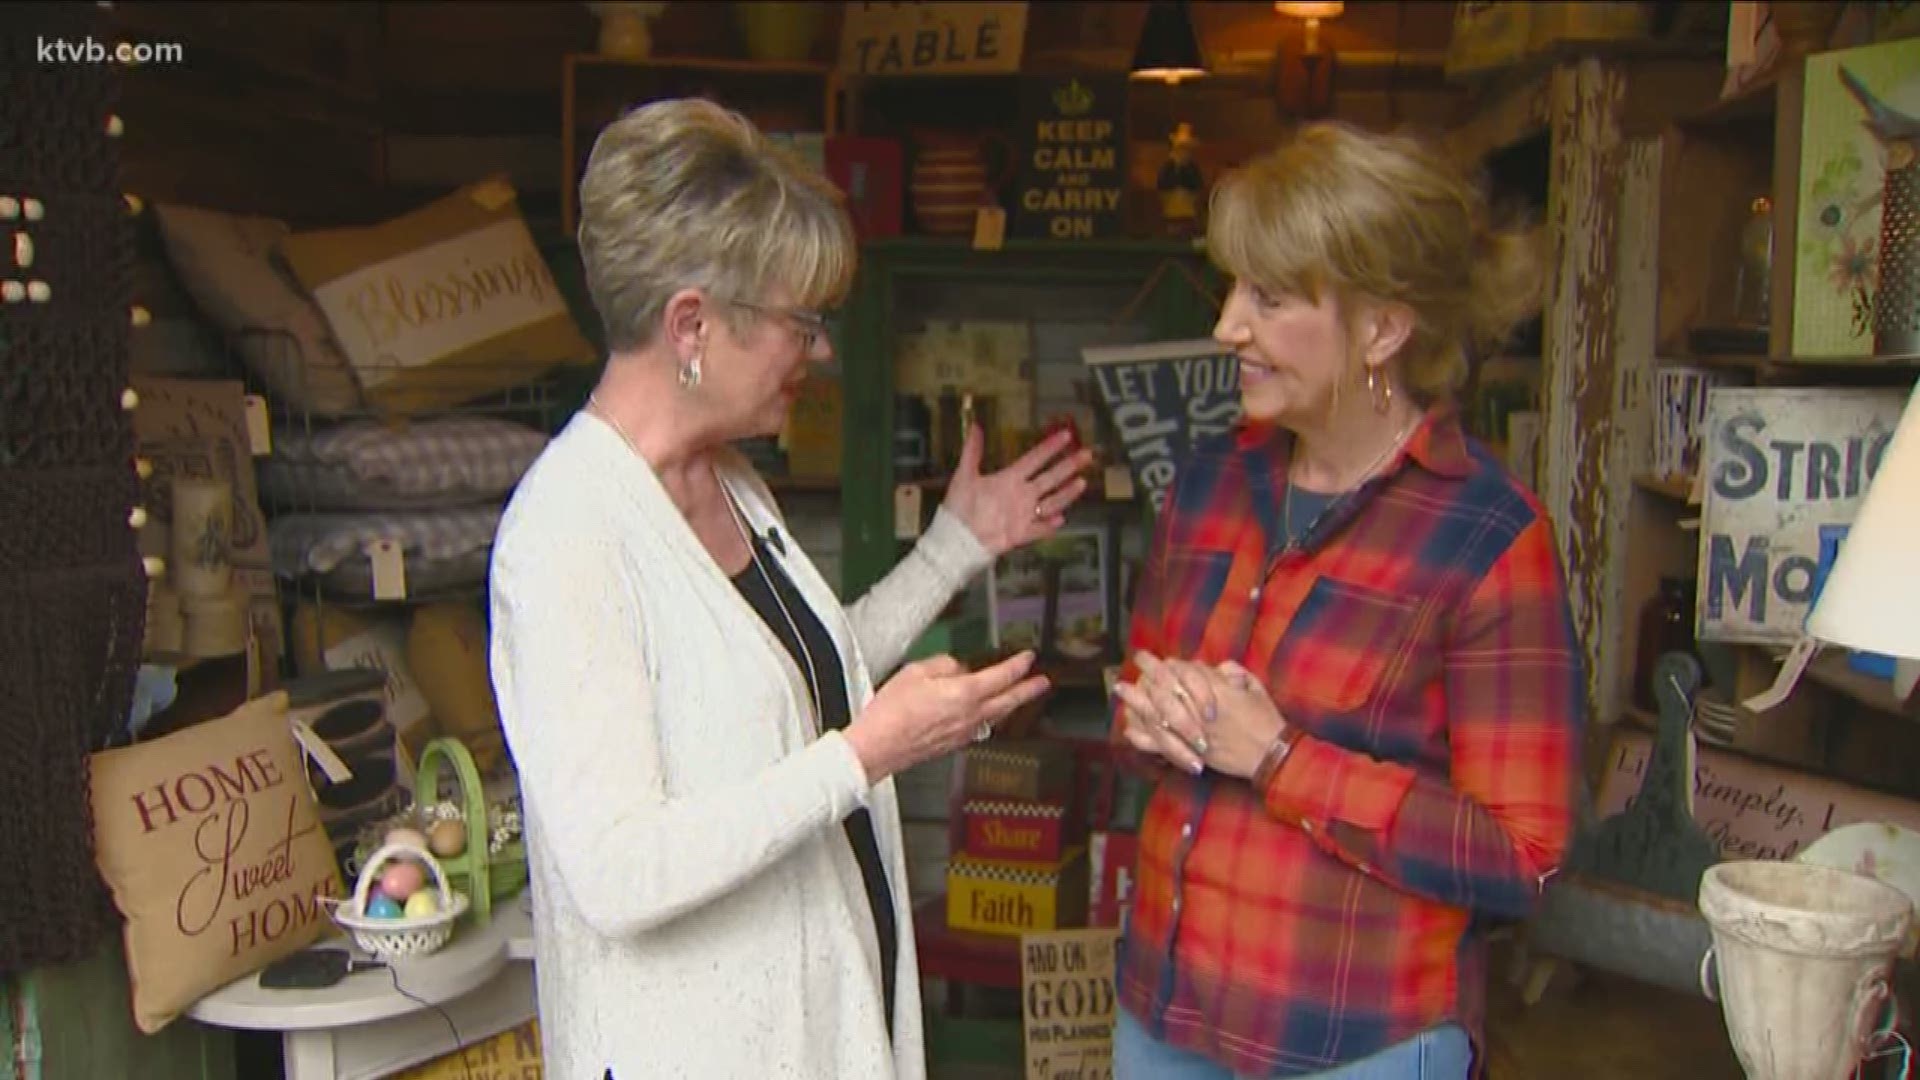 Dee Sarton talks with Brenda Buckingham about bringing her business to Idaho.